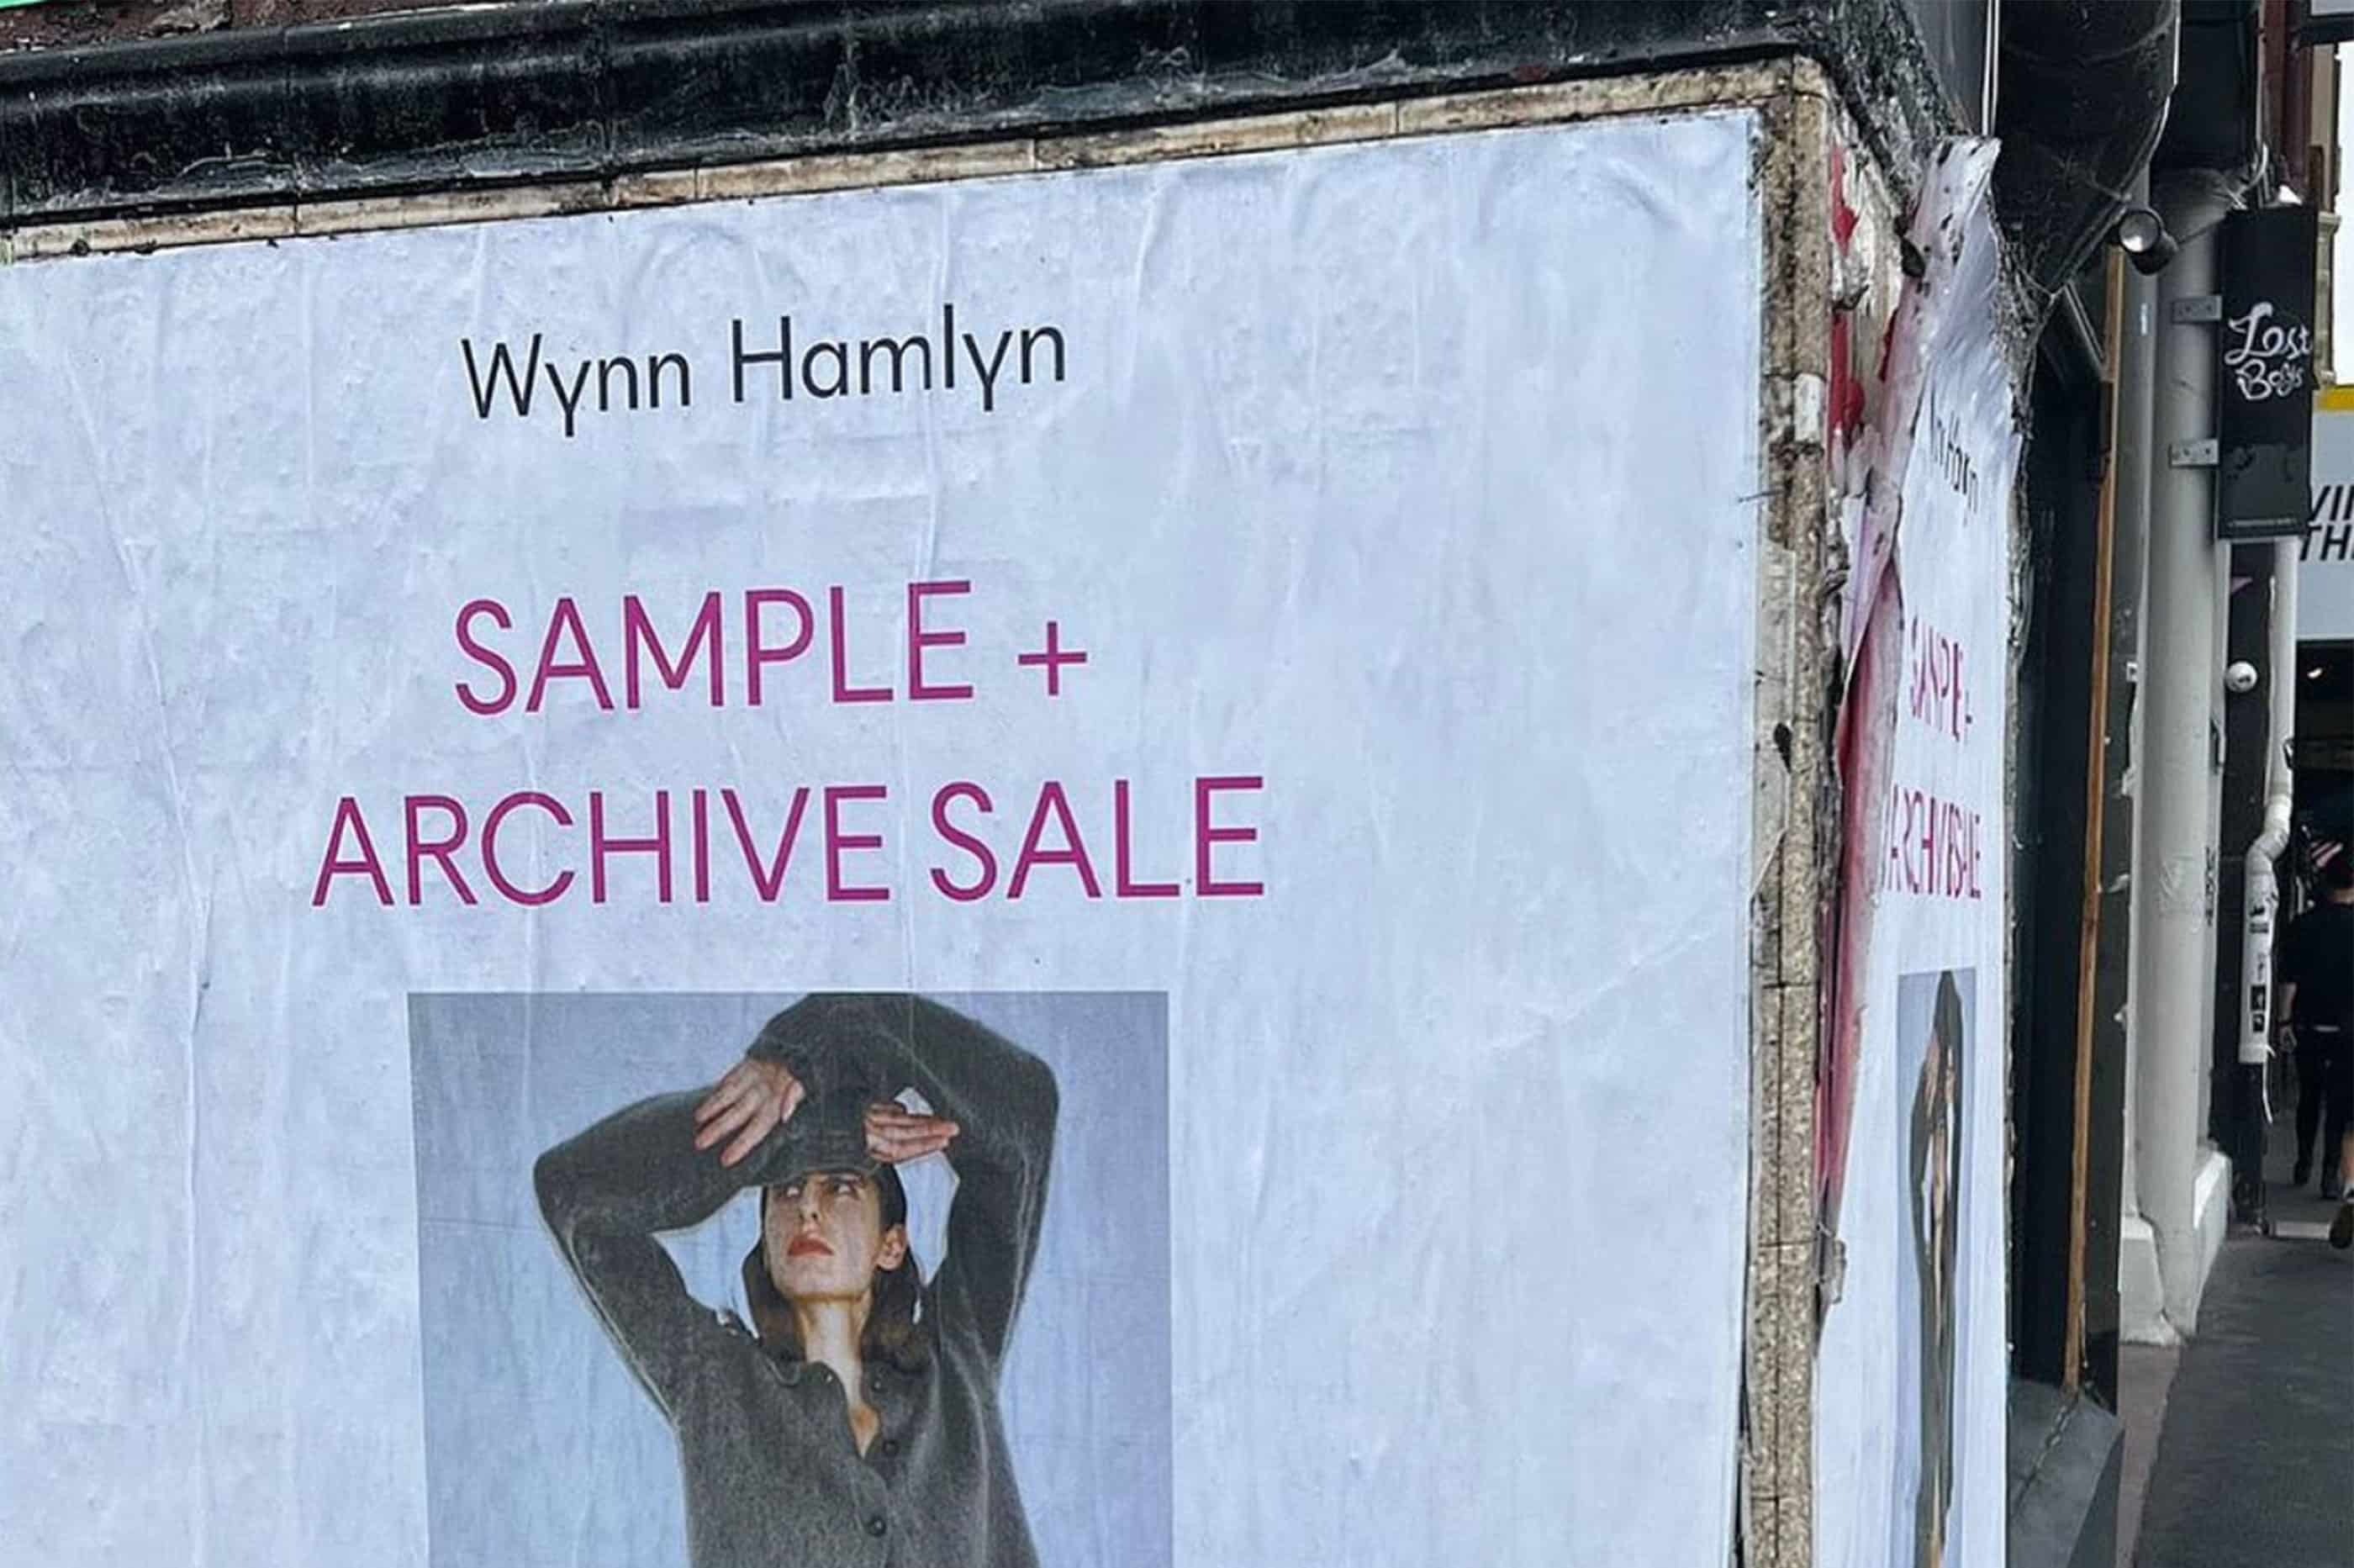 Wynn Hamlyn will be hosting a sample sale this weekend in Melbourne